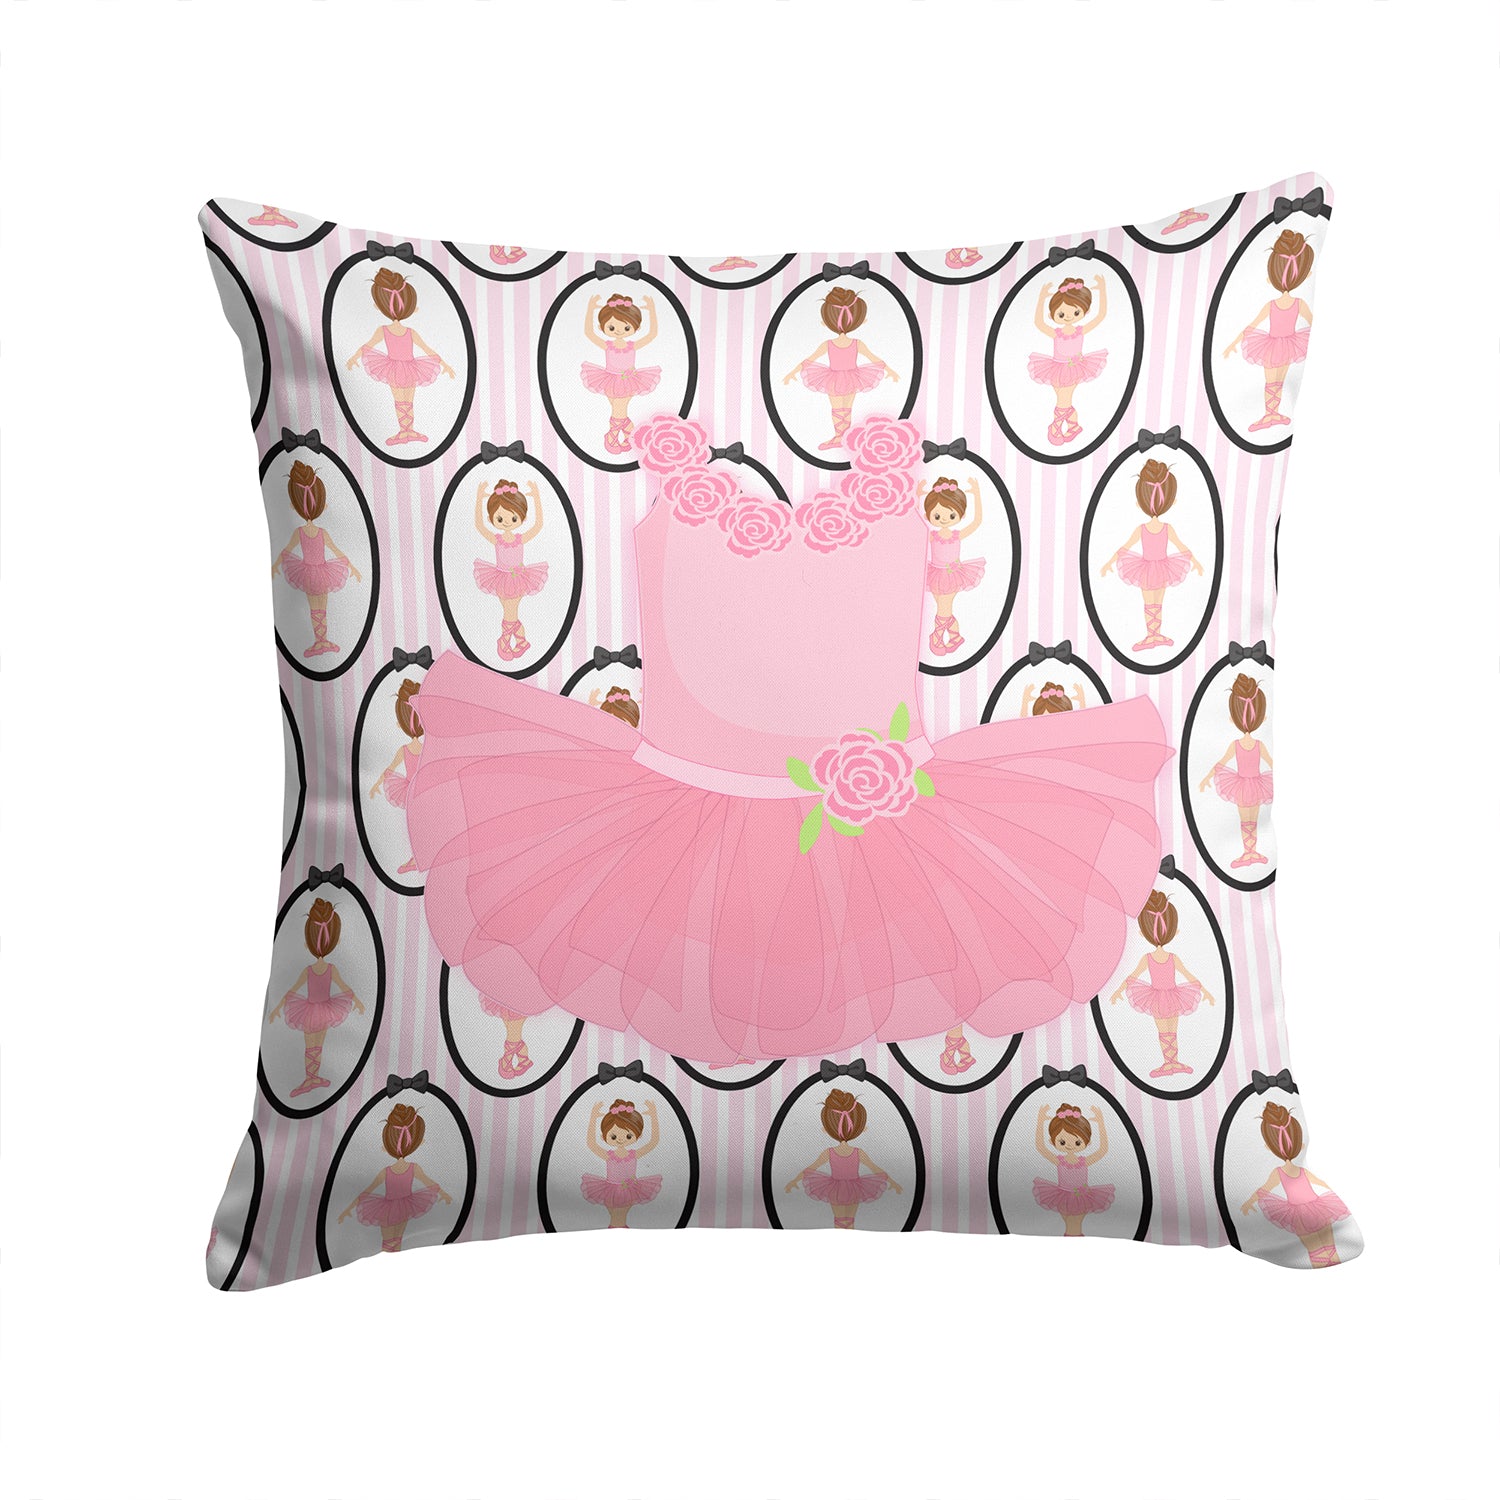 Ballerina Pink Tutu Fabric Decorative Pillow BB5153PW1414 - the-store.com